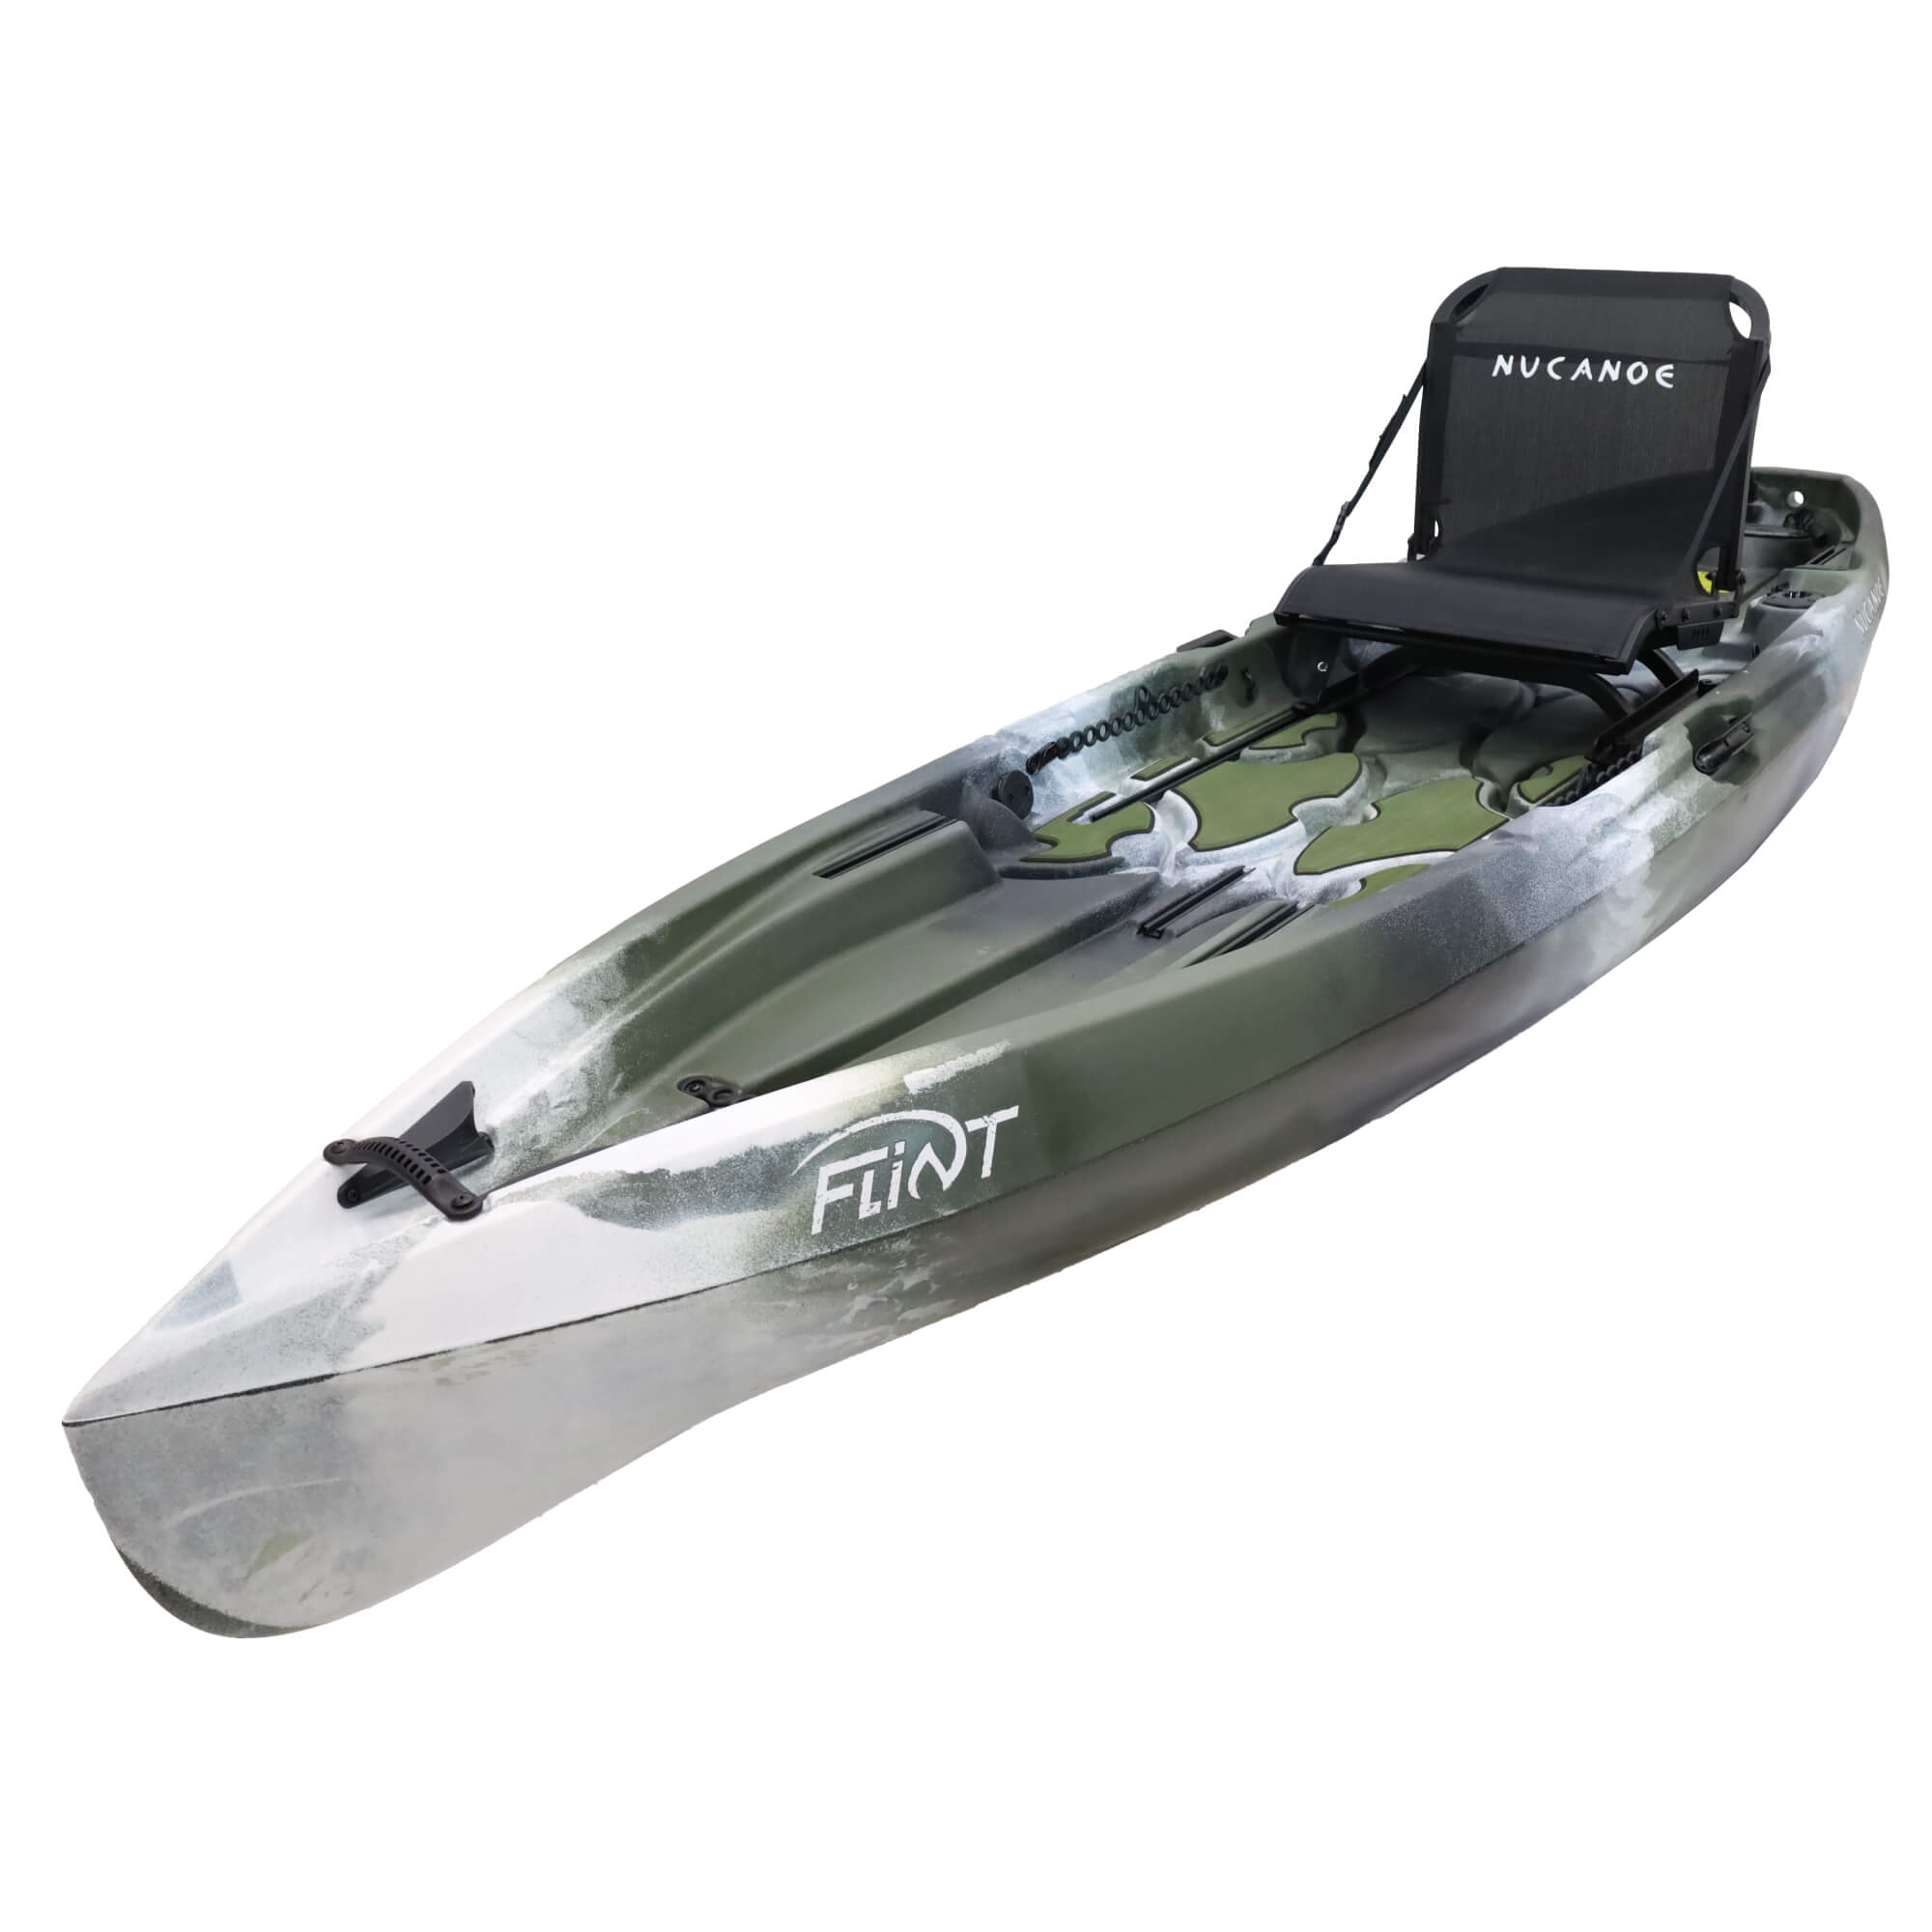 Buy NuCanoe Flint Fishing Kayak Online - Kayak Creek